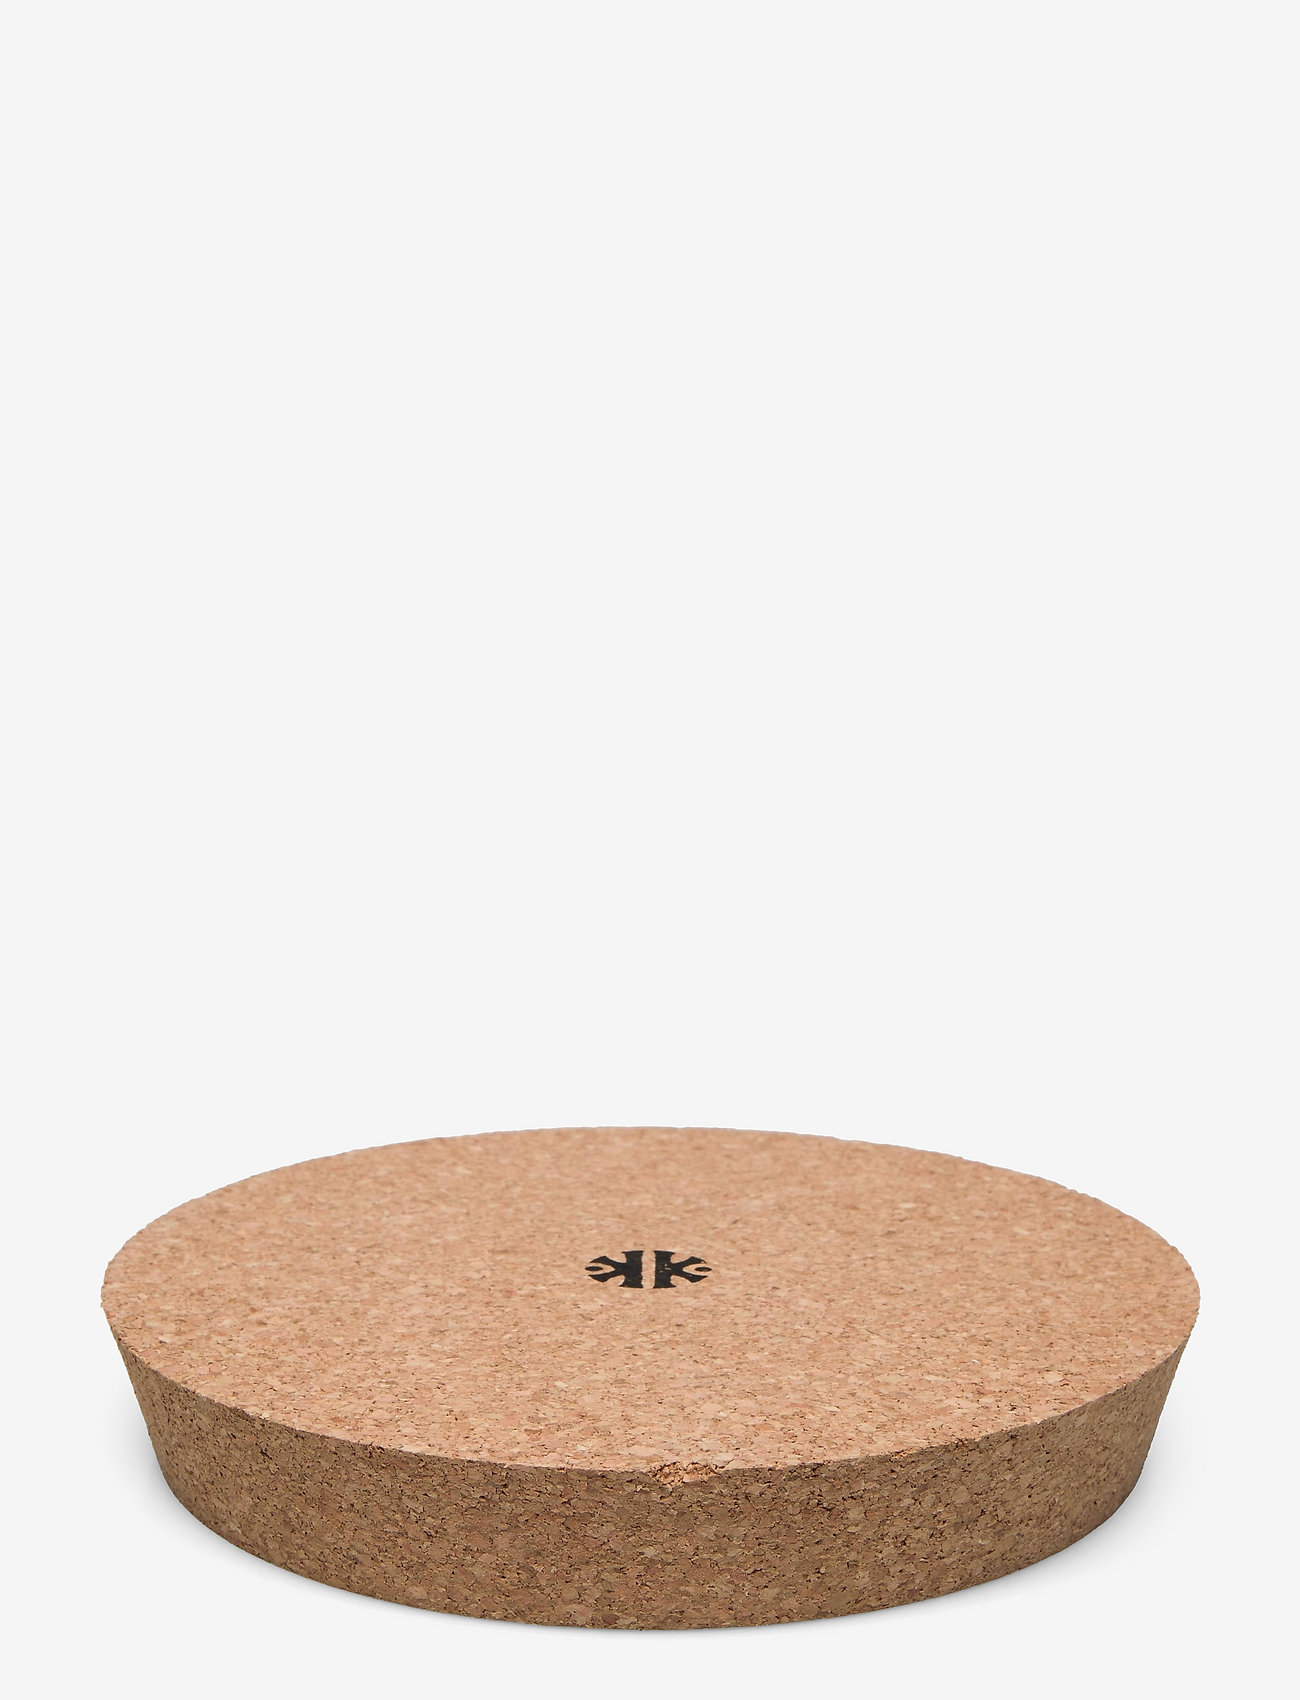 Knabstrup Keramik - Cork lid - lowest prices - cork - 0